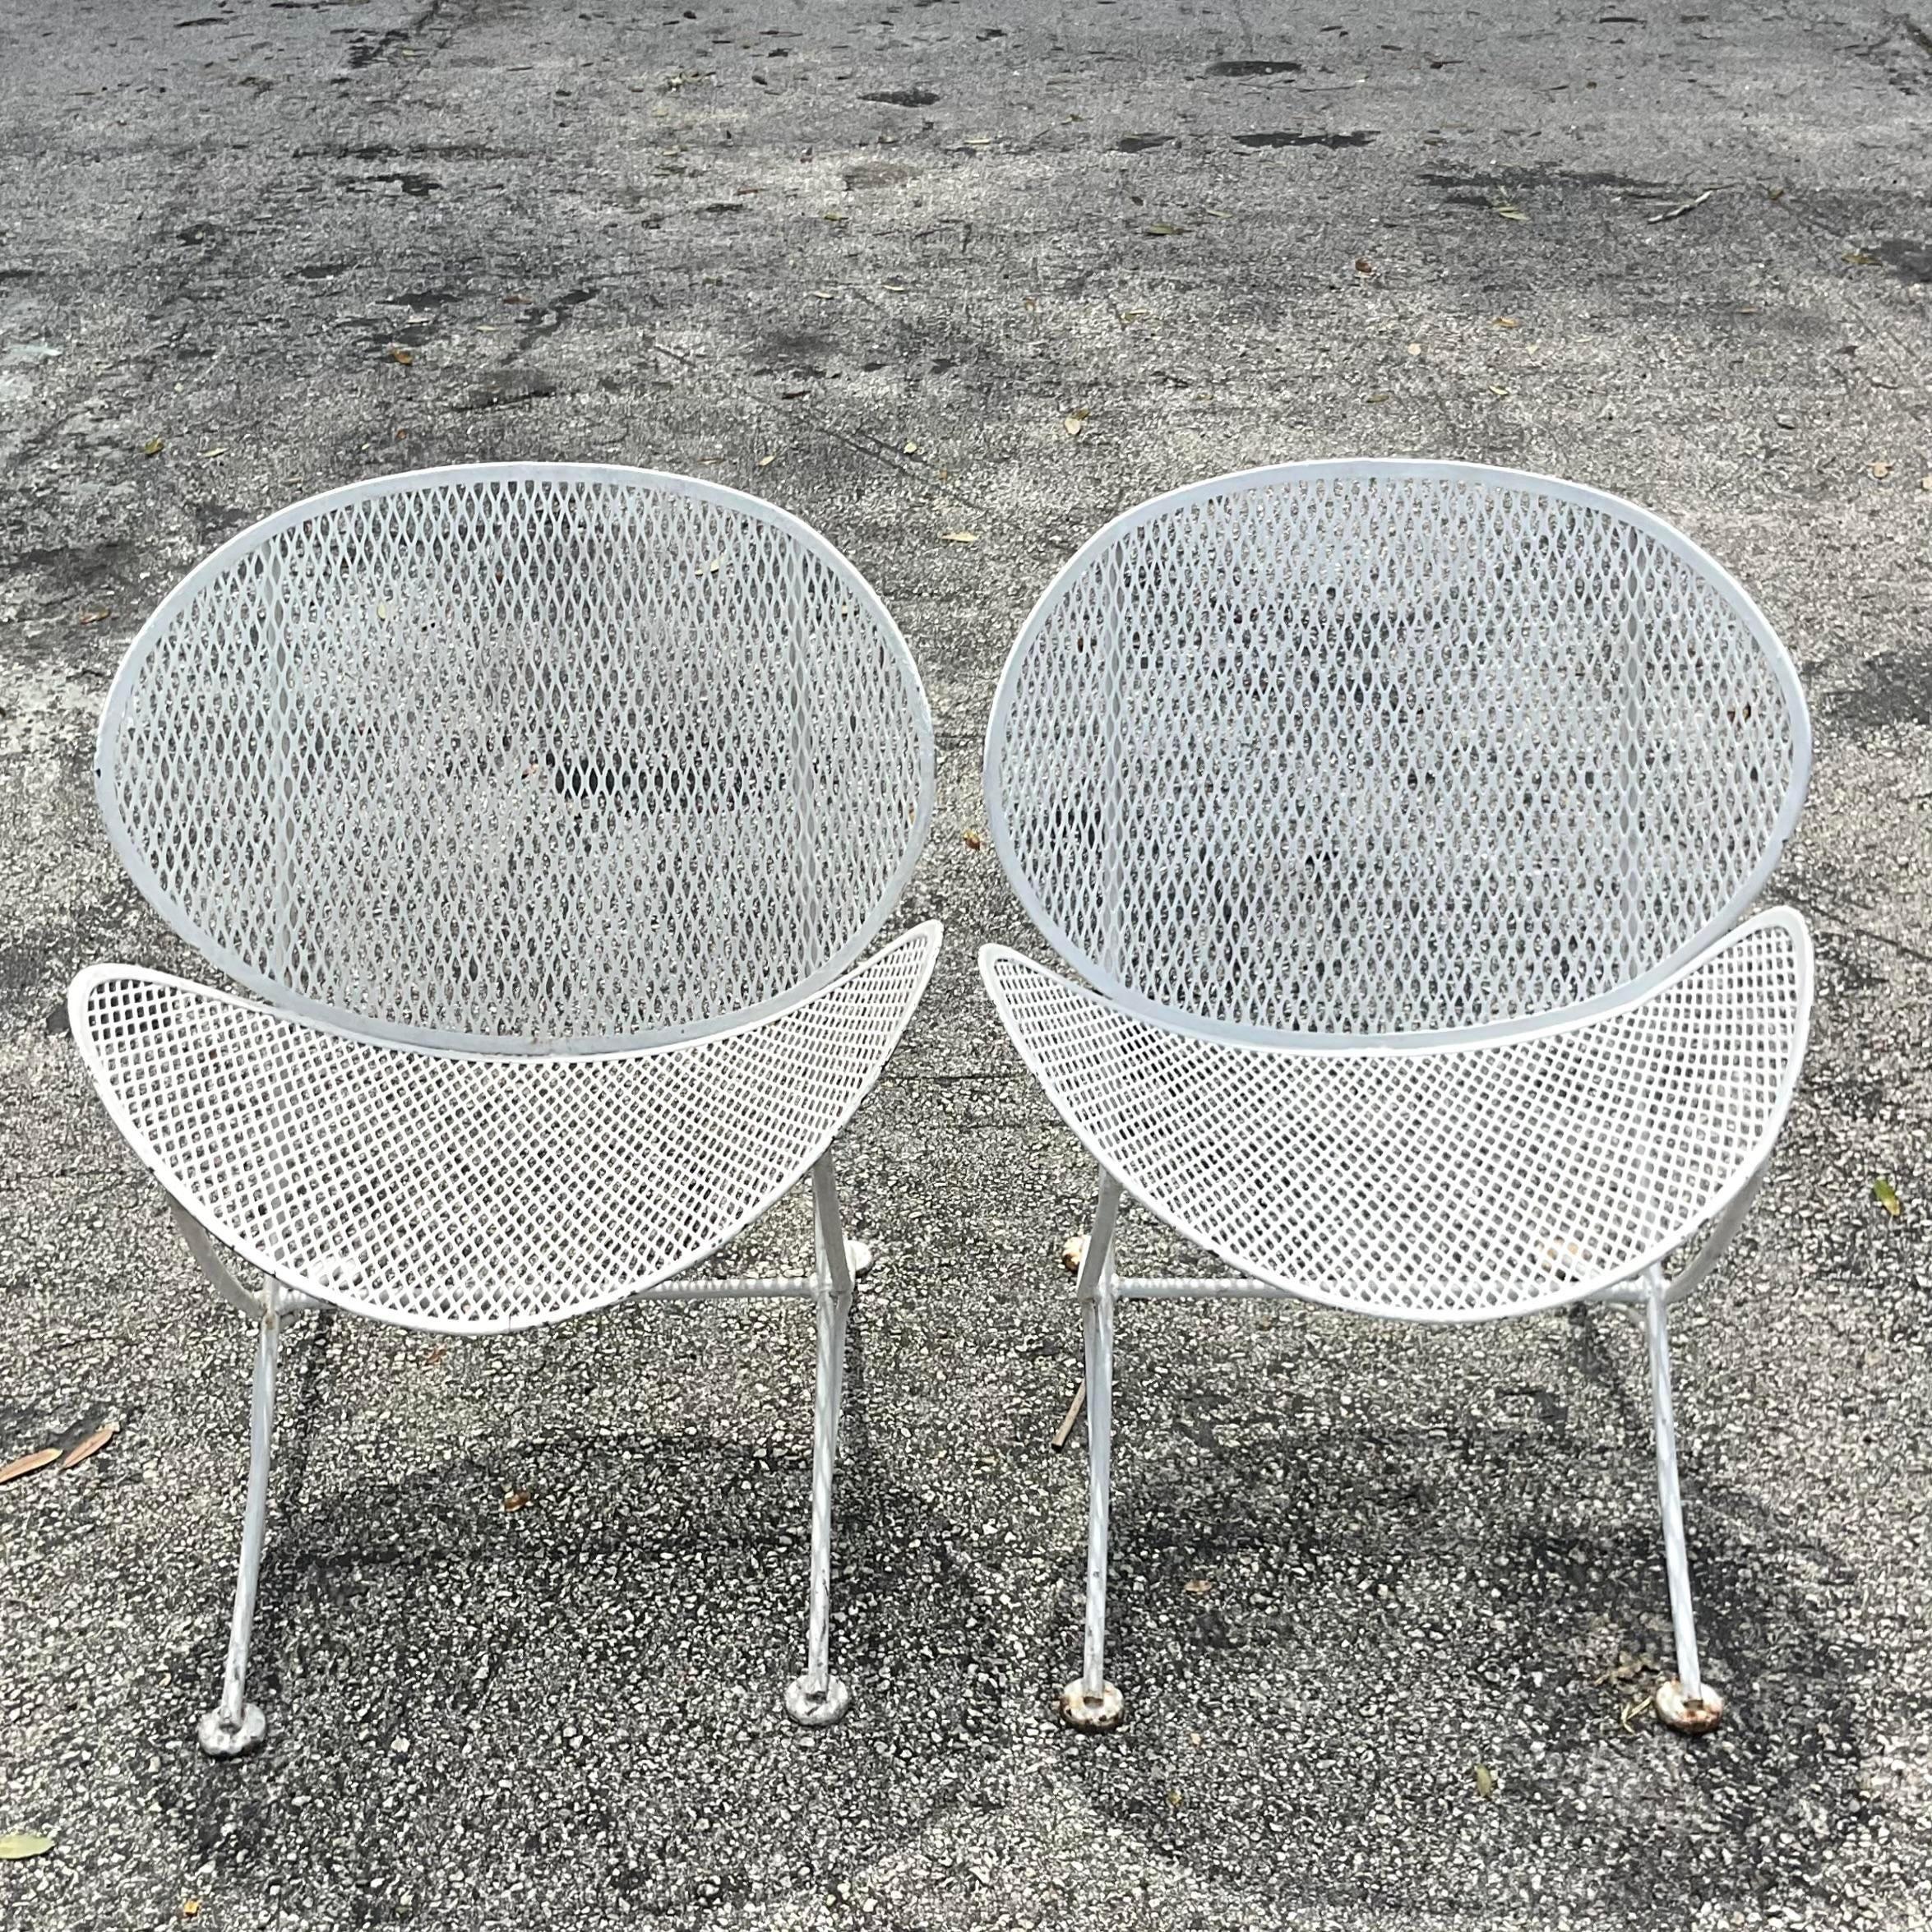 American Vintage Mid-Century Modern Salterini Wrought Iron “Orange Slice” Chairs - a Pair For Sale